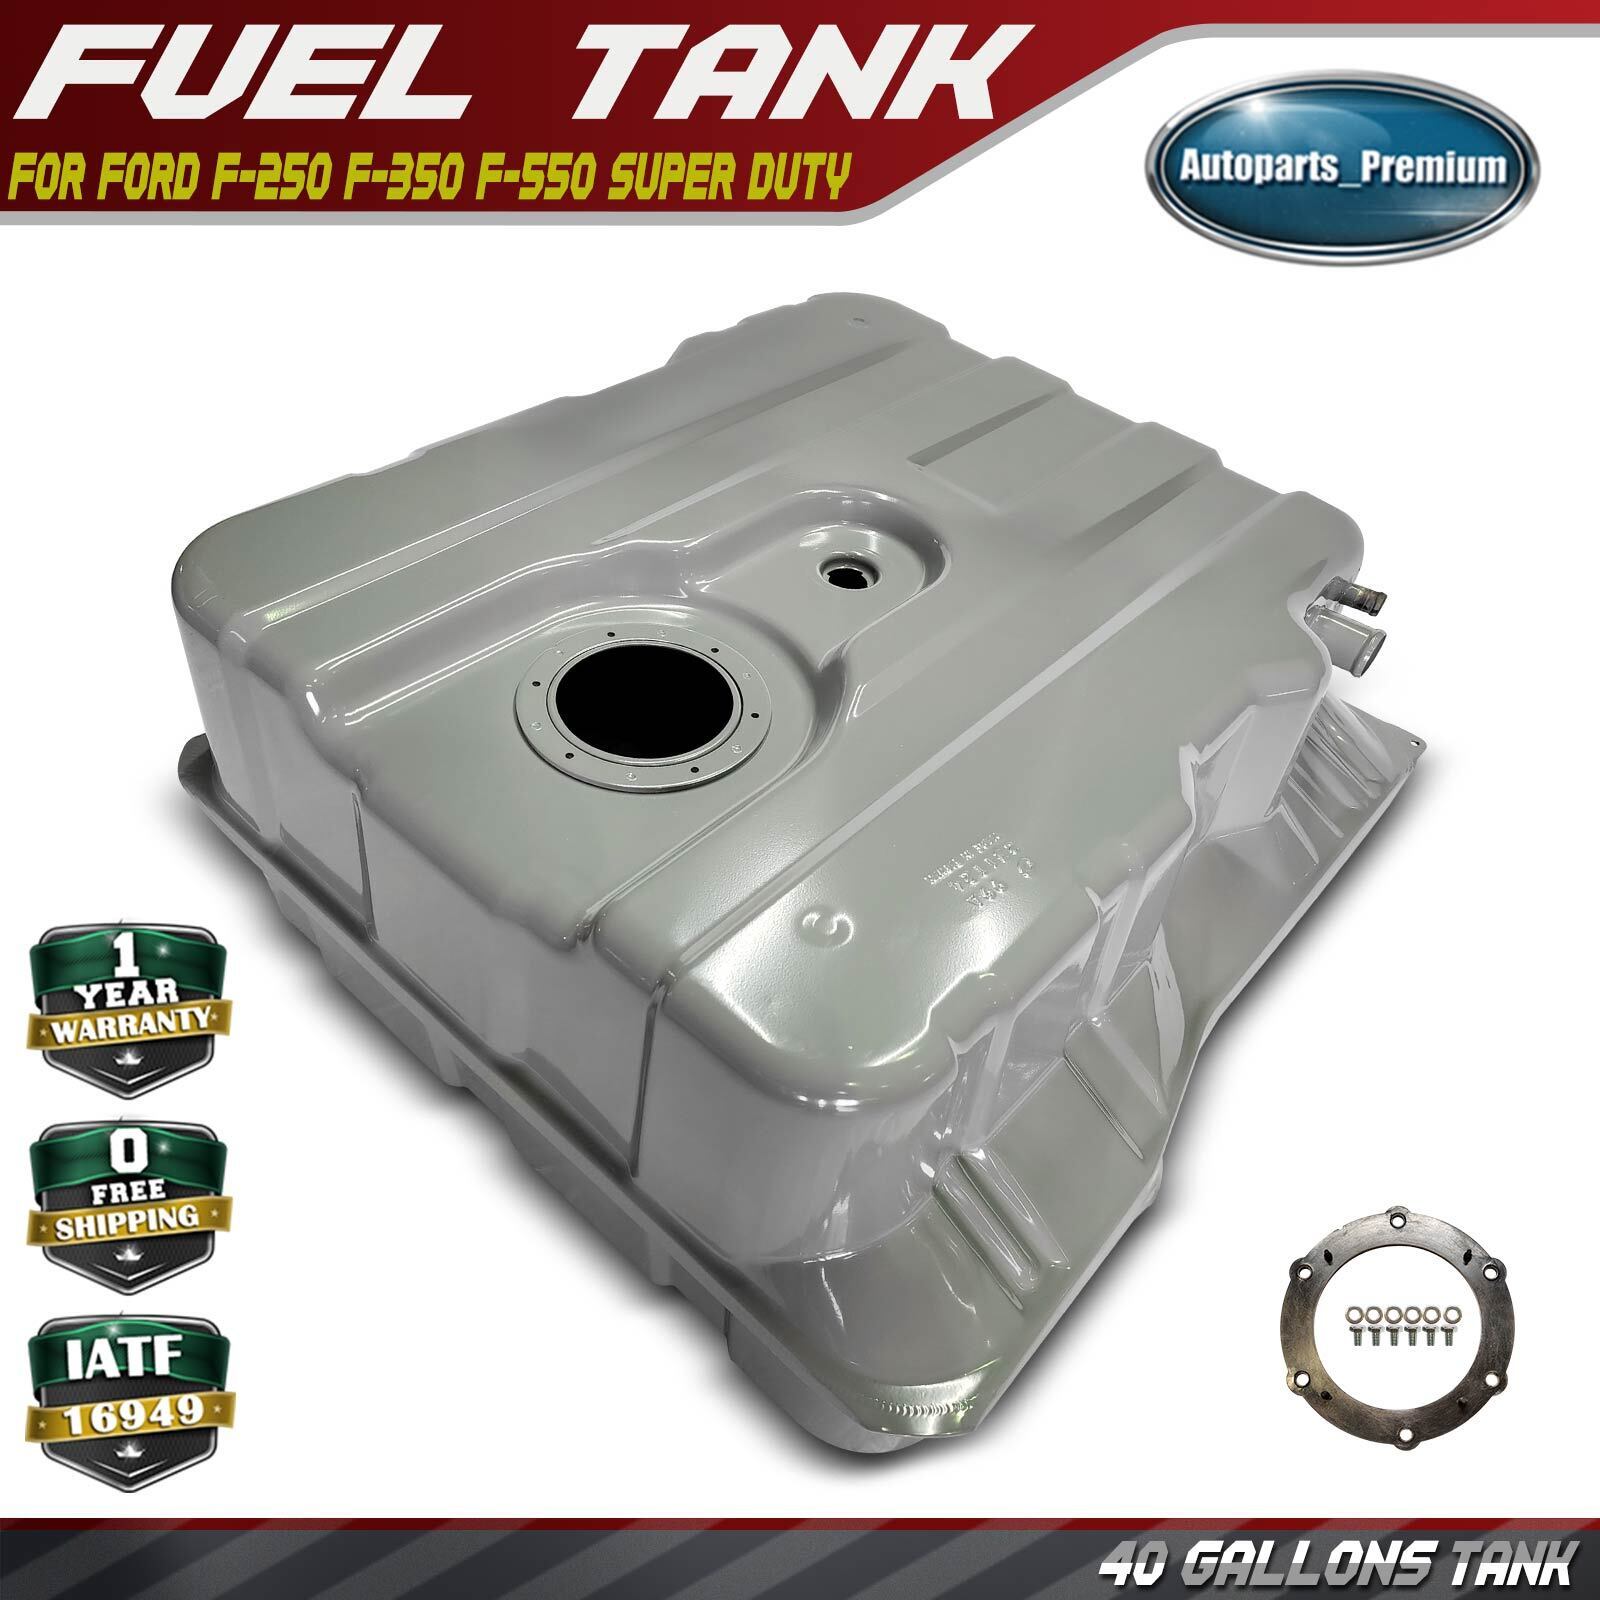 40 Gallons Fuel Tank for Ford F-250 Super Duty 2001-2010 F-350 F-550 Super Duty